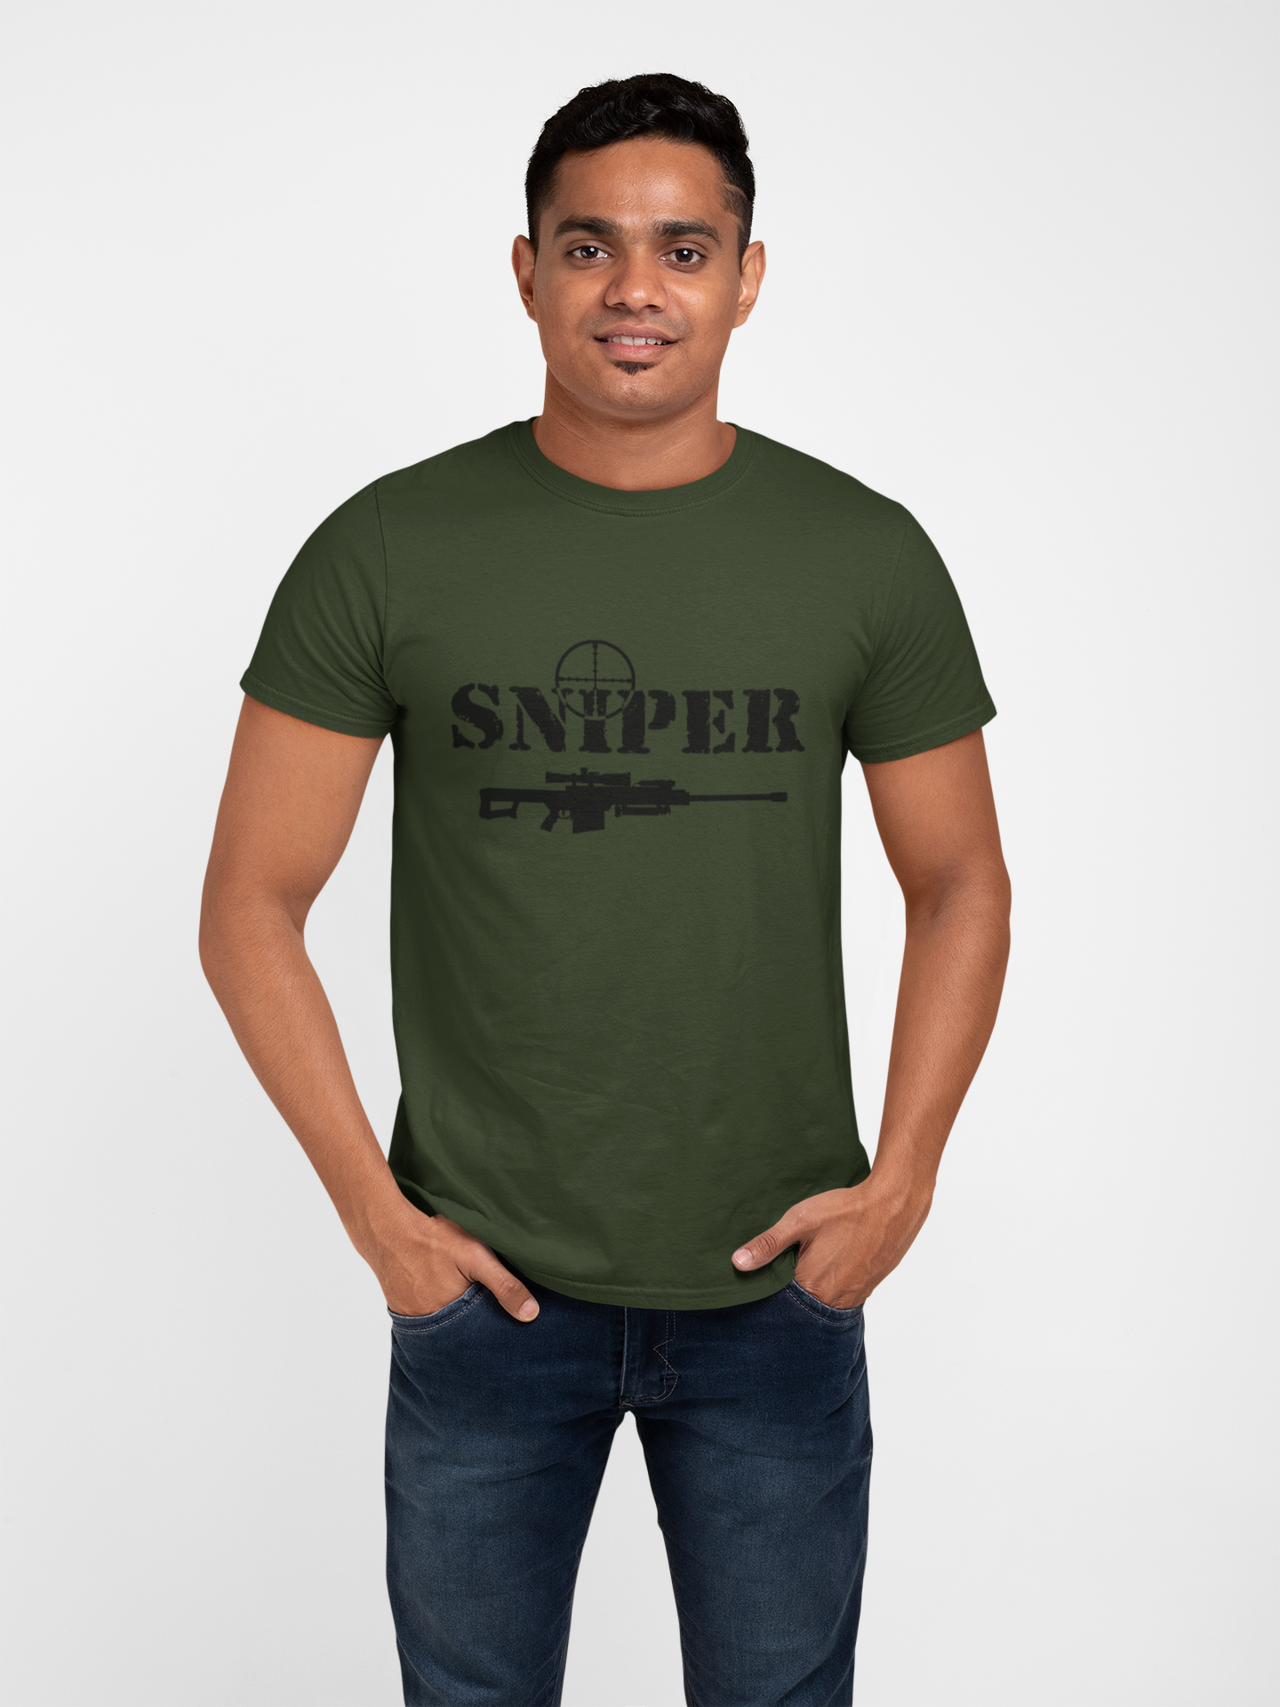 Sniper T-shirt - Sniper, Barrett M82 (Men)